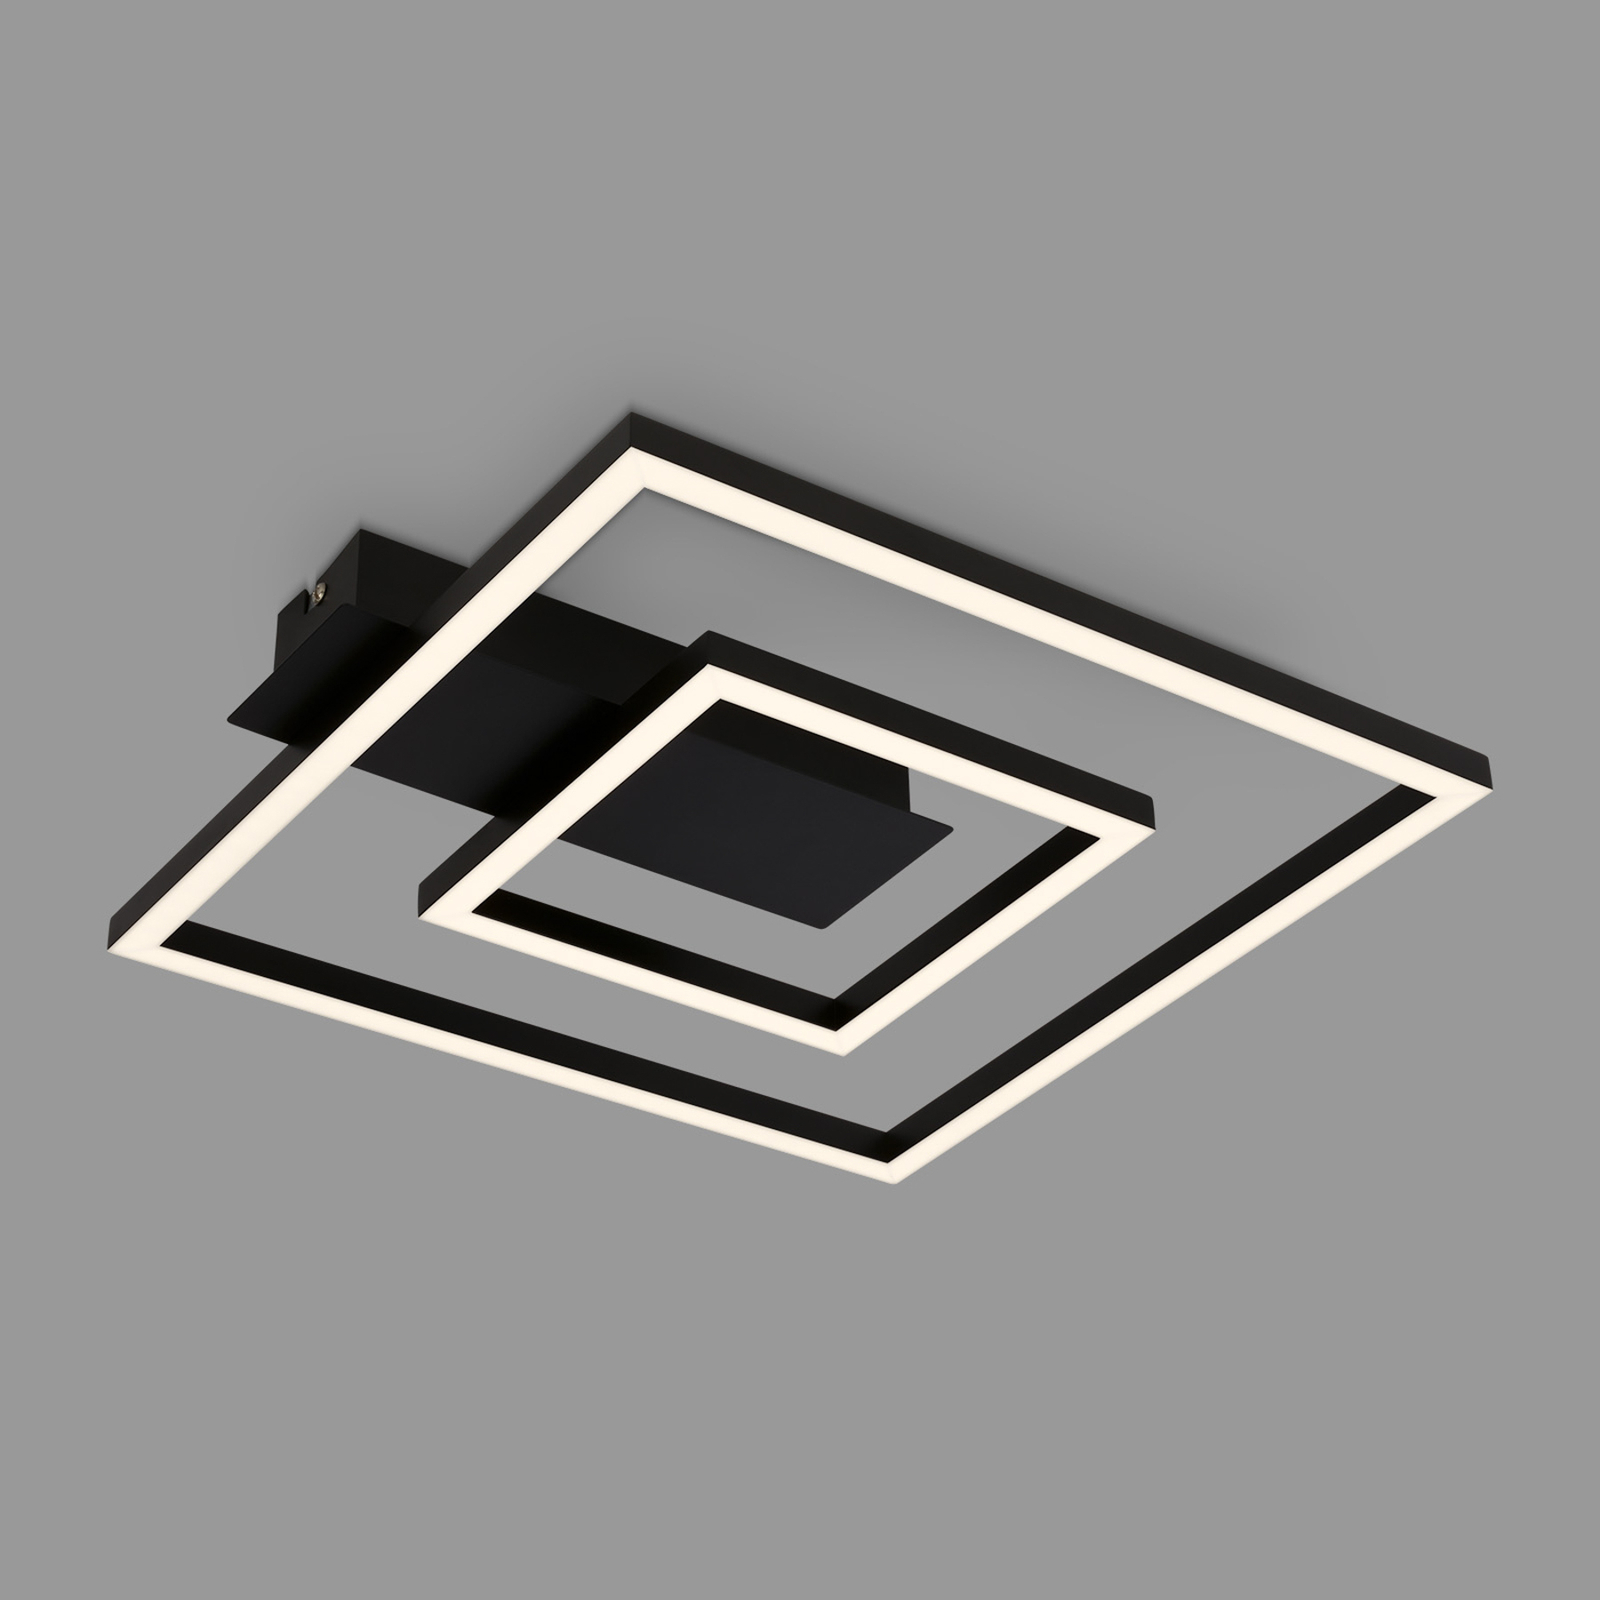 LED-taklampa 3772 med 2 ram, svart